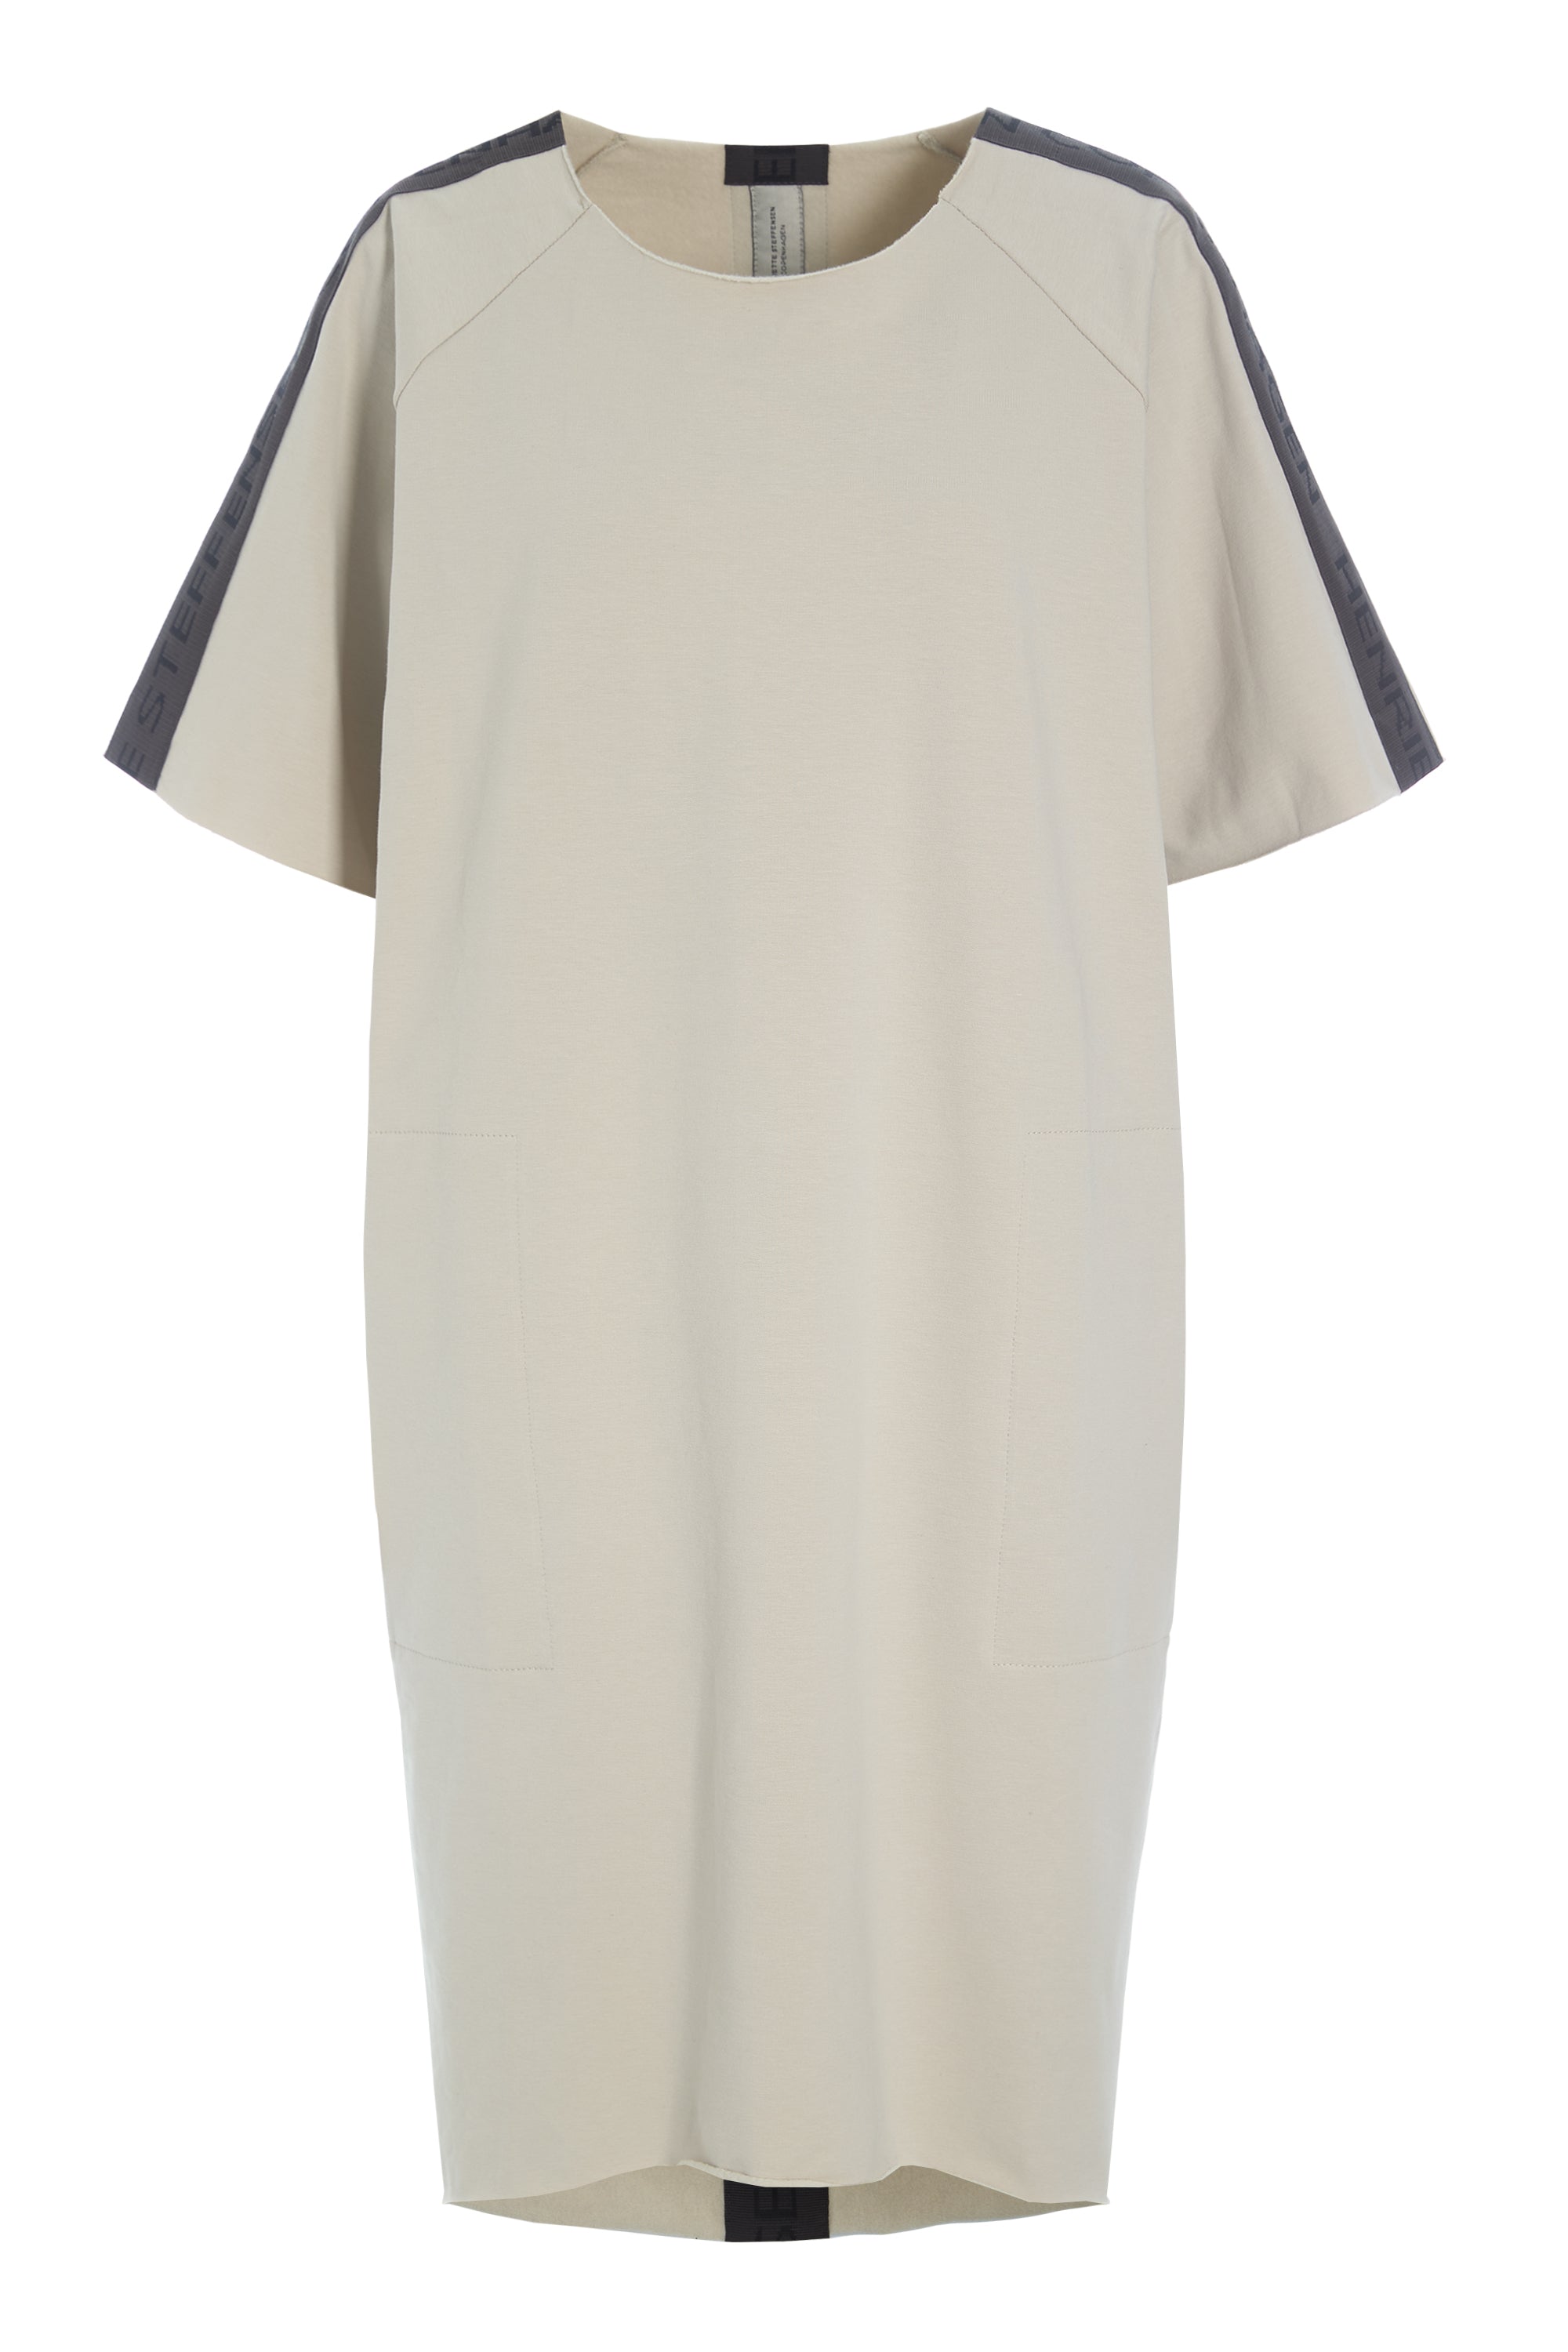 HENRIETTE STEFFENSEN COPENHAGEN SWEAT DRESS - 73002 DRESS cotton KIT 831